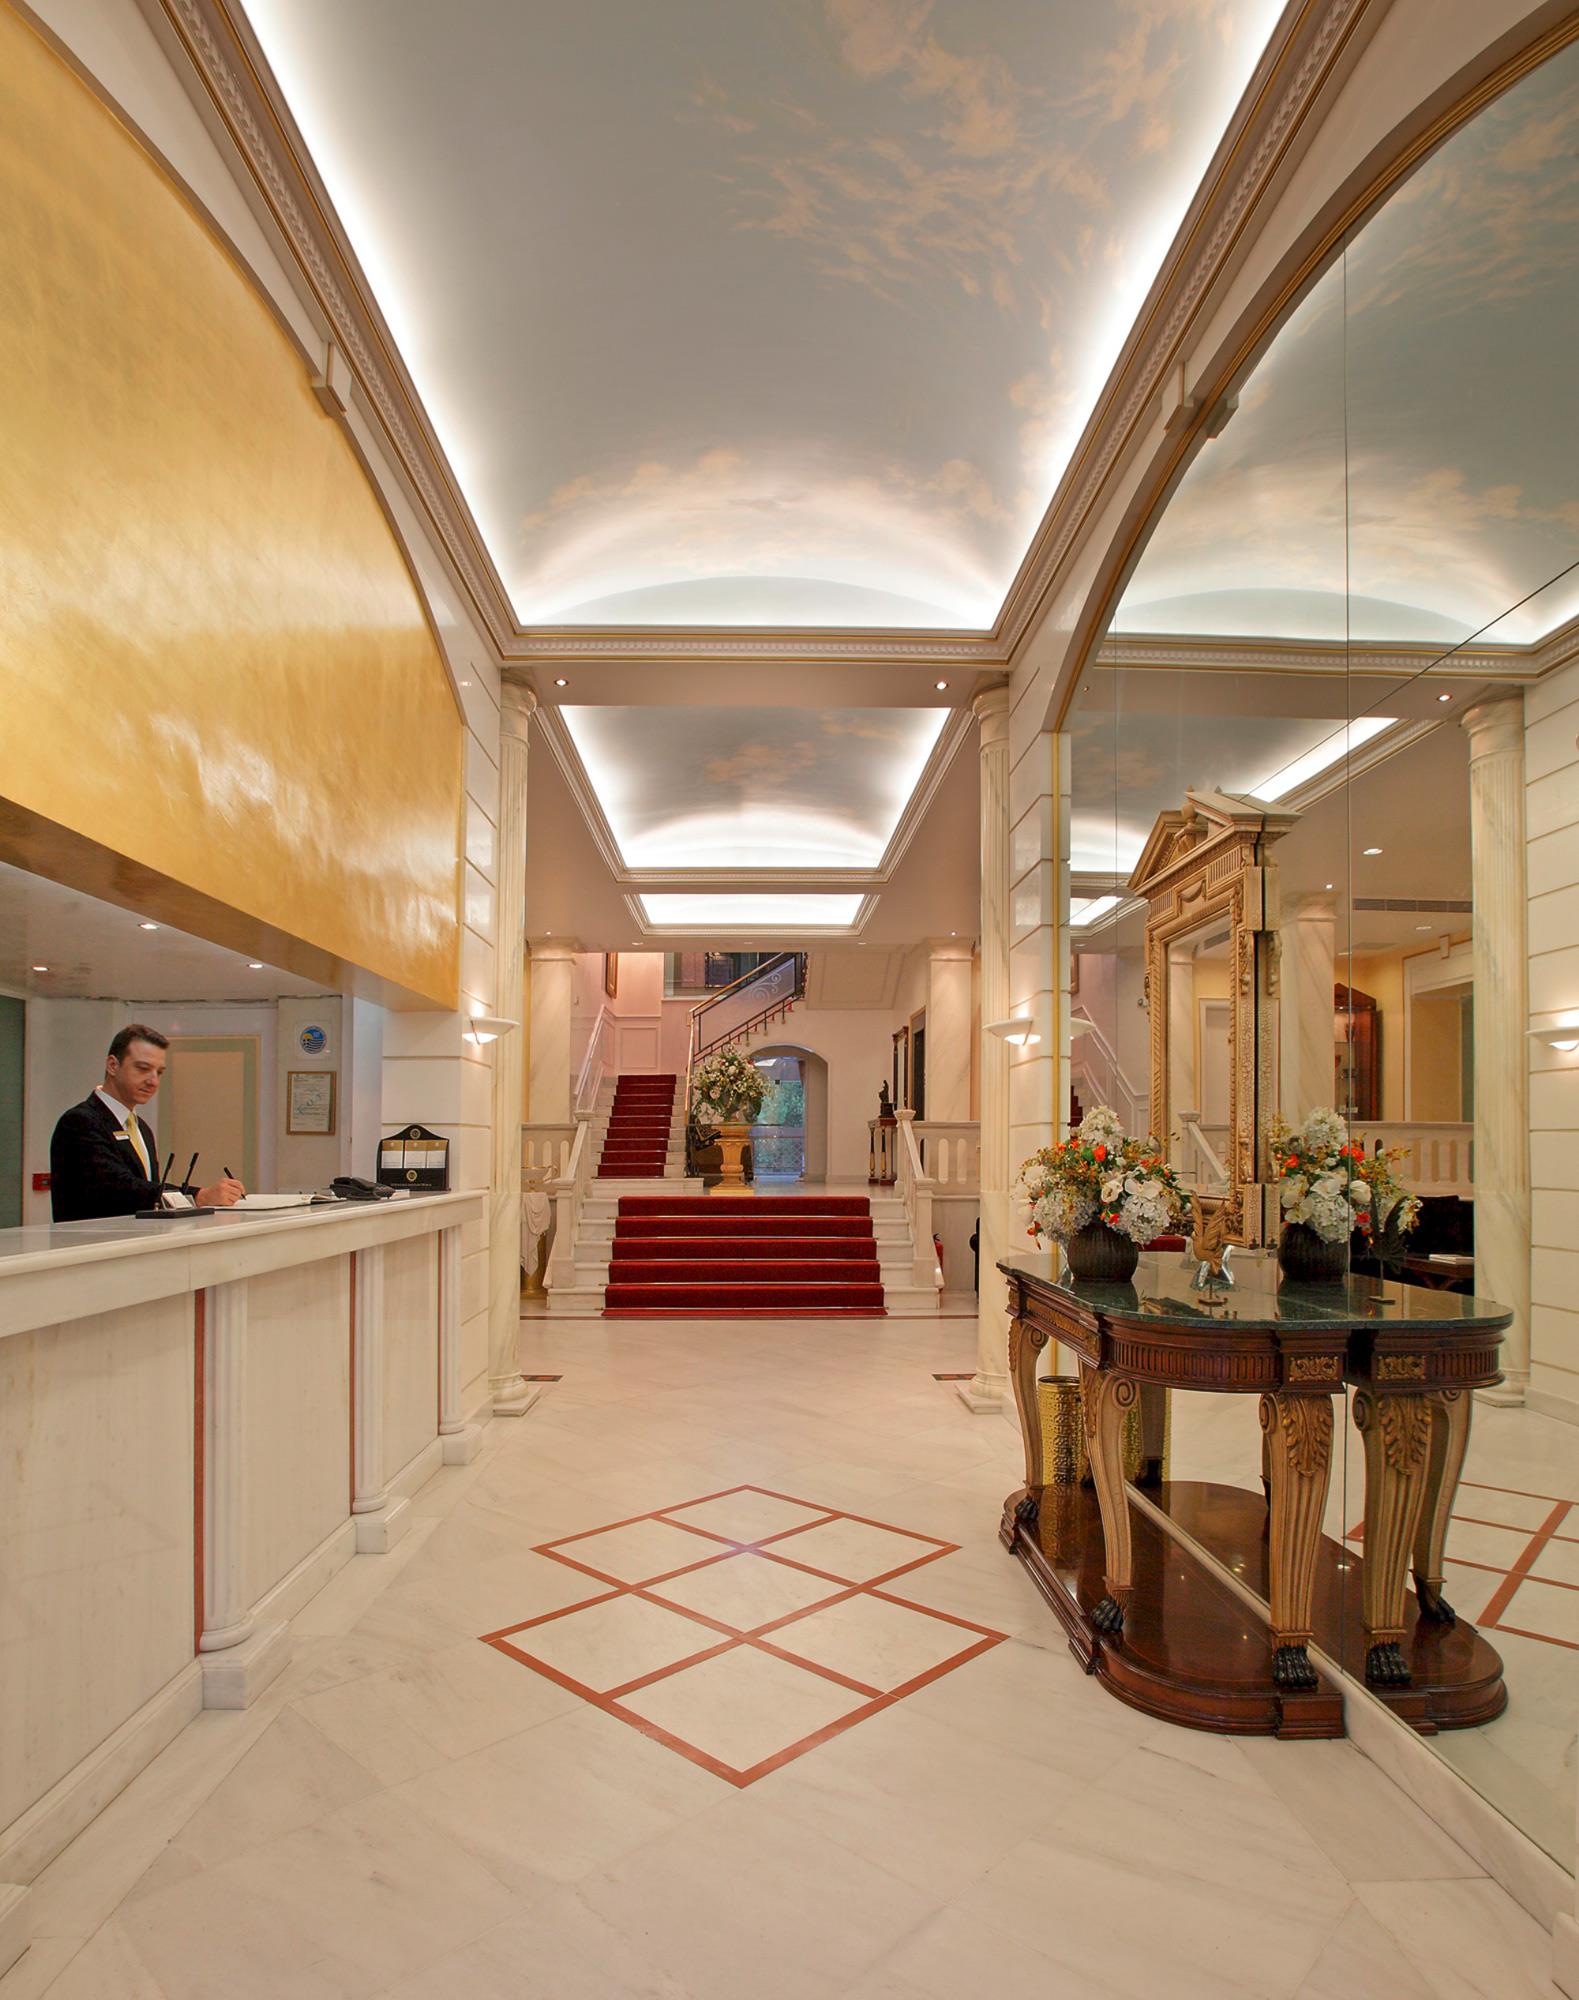 Туры в Theoxenia Palace Hotel